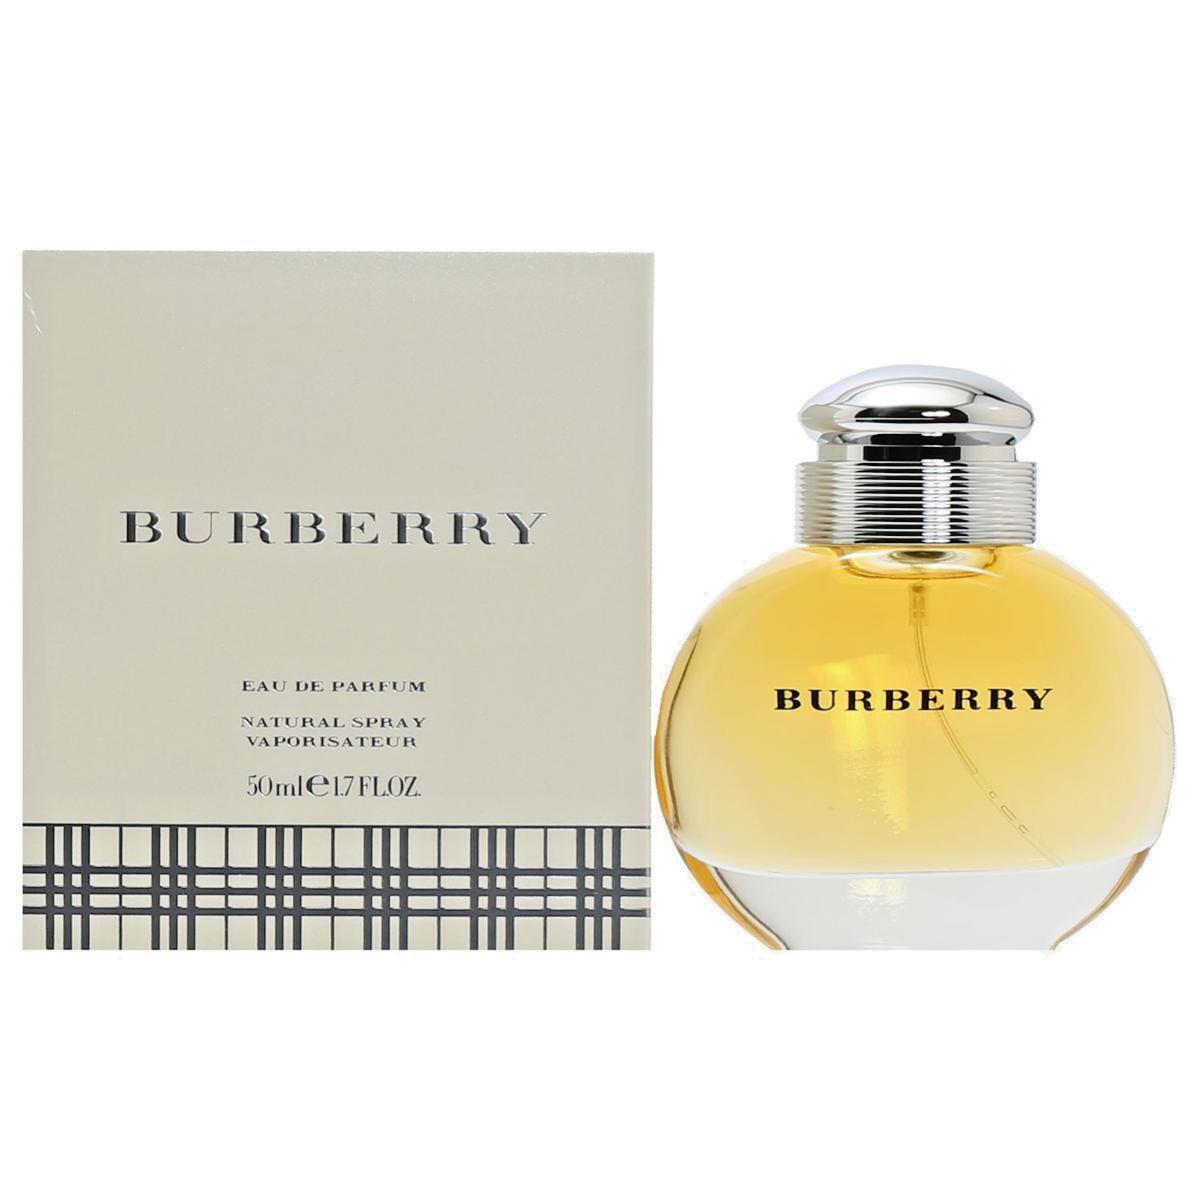 Burberry Classic 50ml / 1.7 oz Eau de Parfum Spray For Women Old Packaging